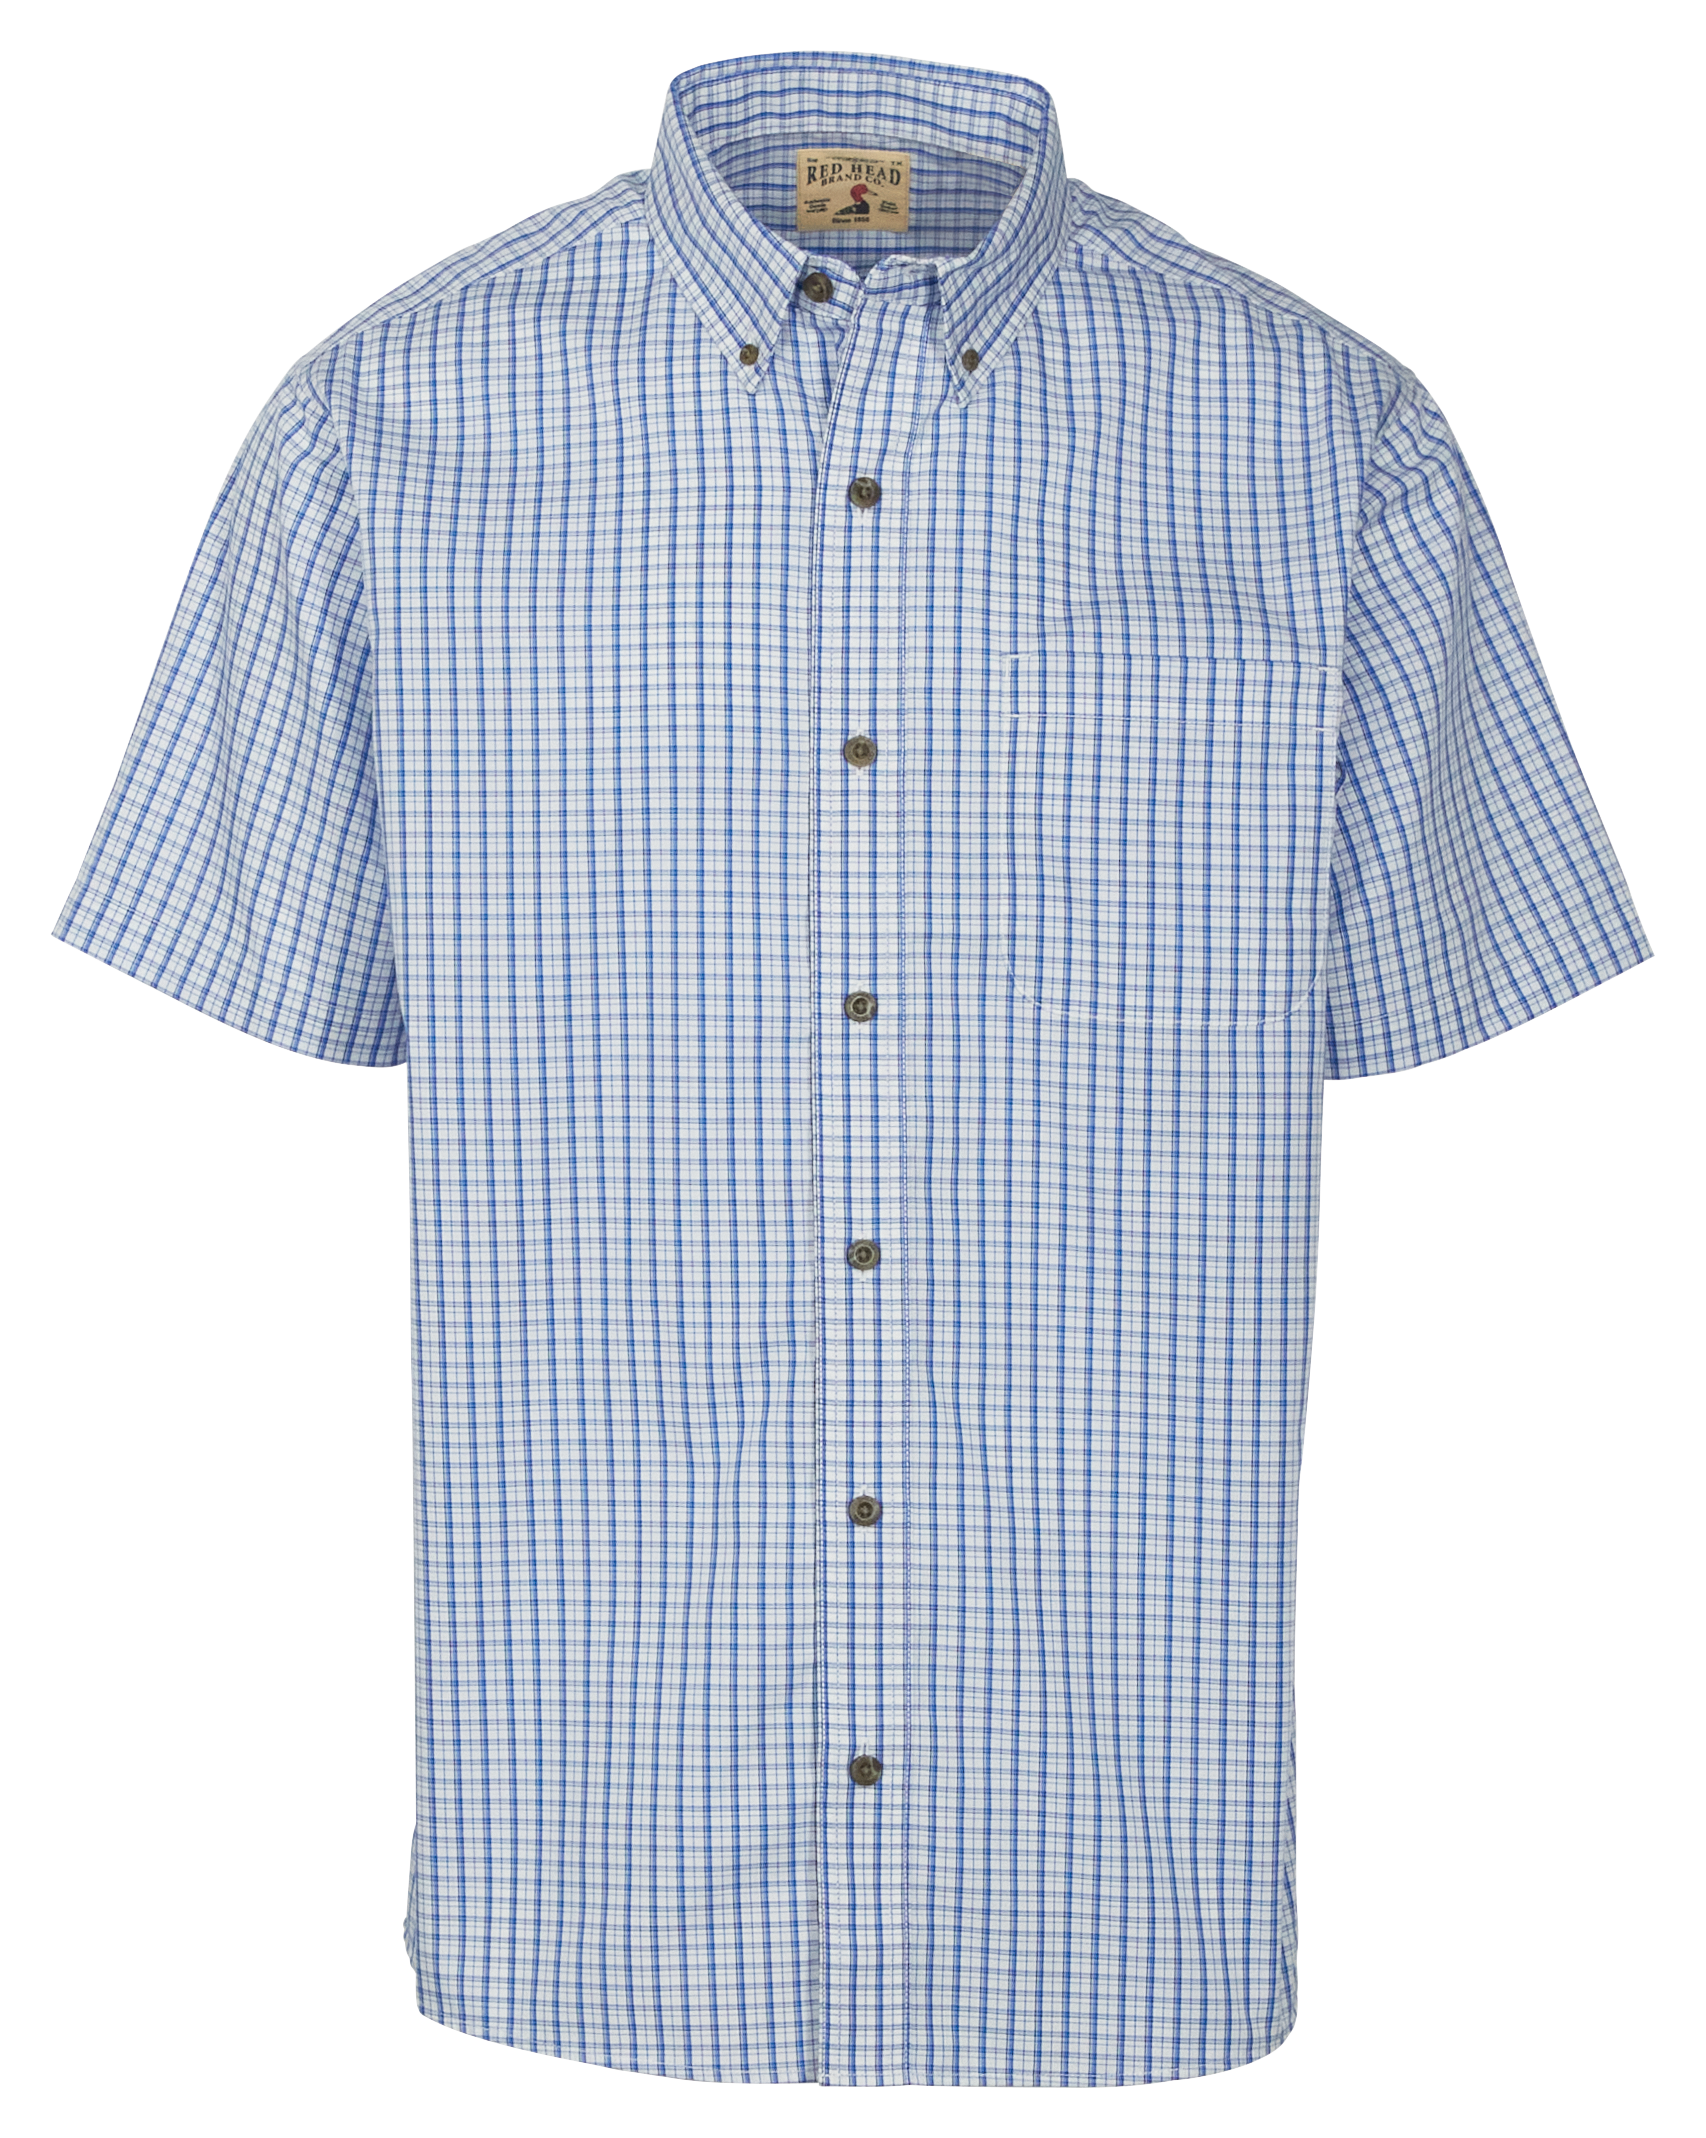 Redhead Wrinkle-Free Plaid Short-Sleeve Button-Down Shirt for Men - Gray Check - 3xlt